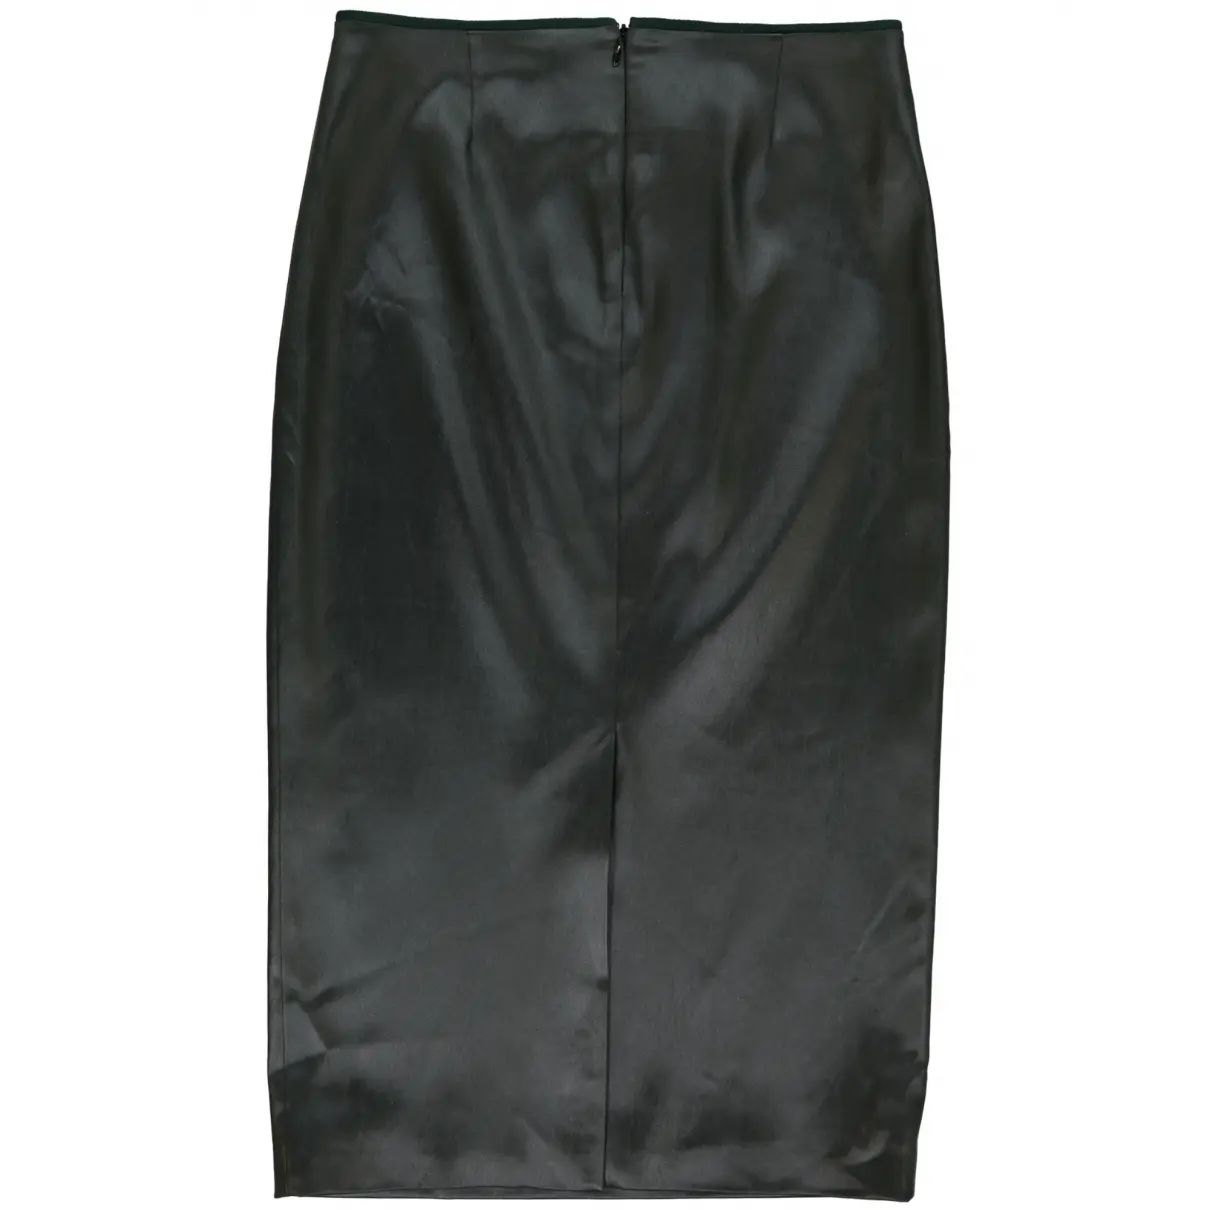 Nicole Farhi Mid-length skirt for sale